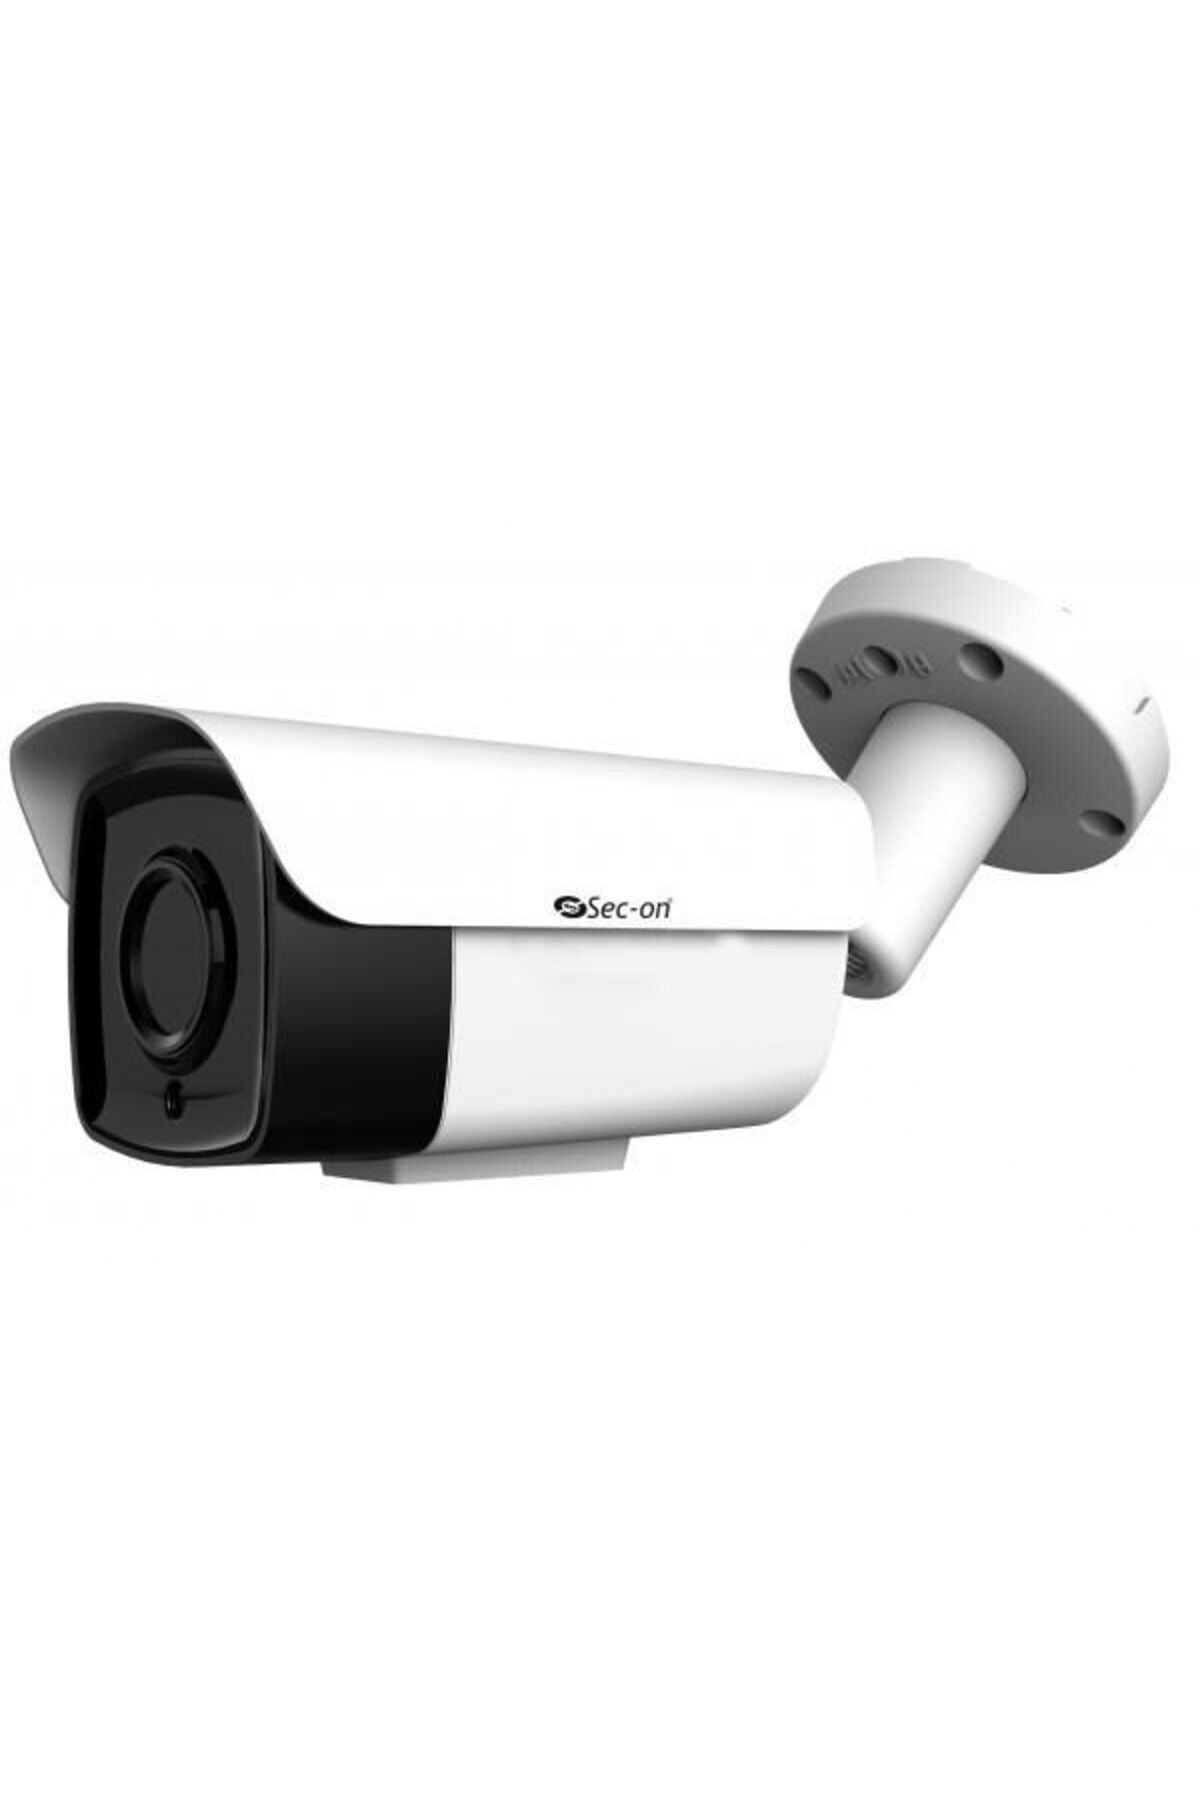 Sec on SEC-ON SC-BF2102-NL 2MP IP Bullet Network Güvenlik Kamerası